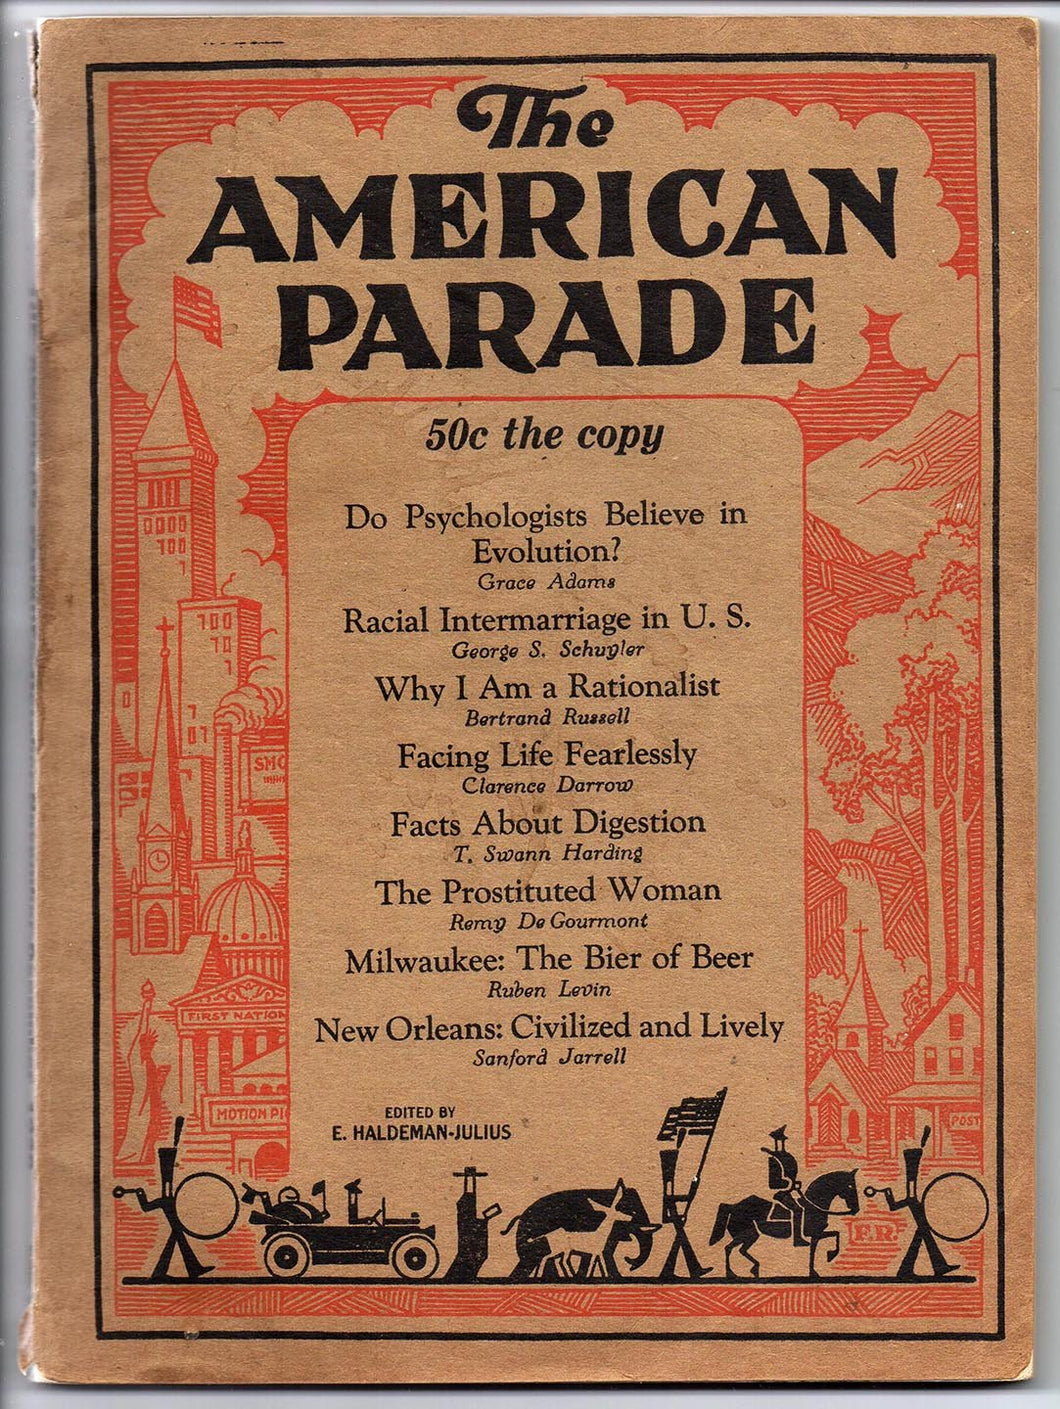 The American Parade Oct.-Dec. 1928